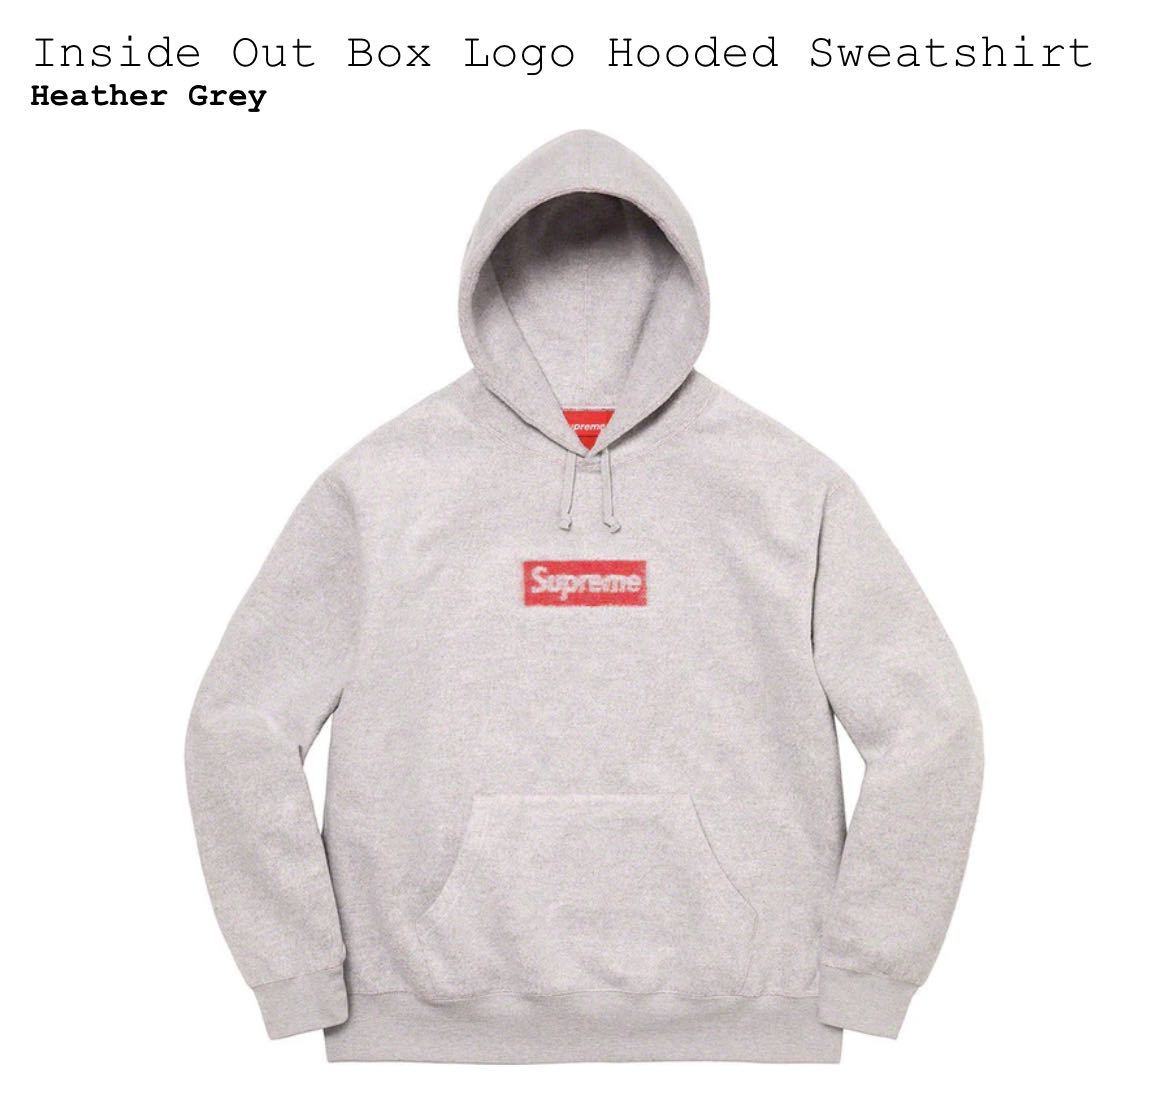 M】Supreme Inside Out Box Logo Hooded Sweatshirt Medium